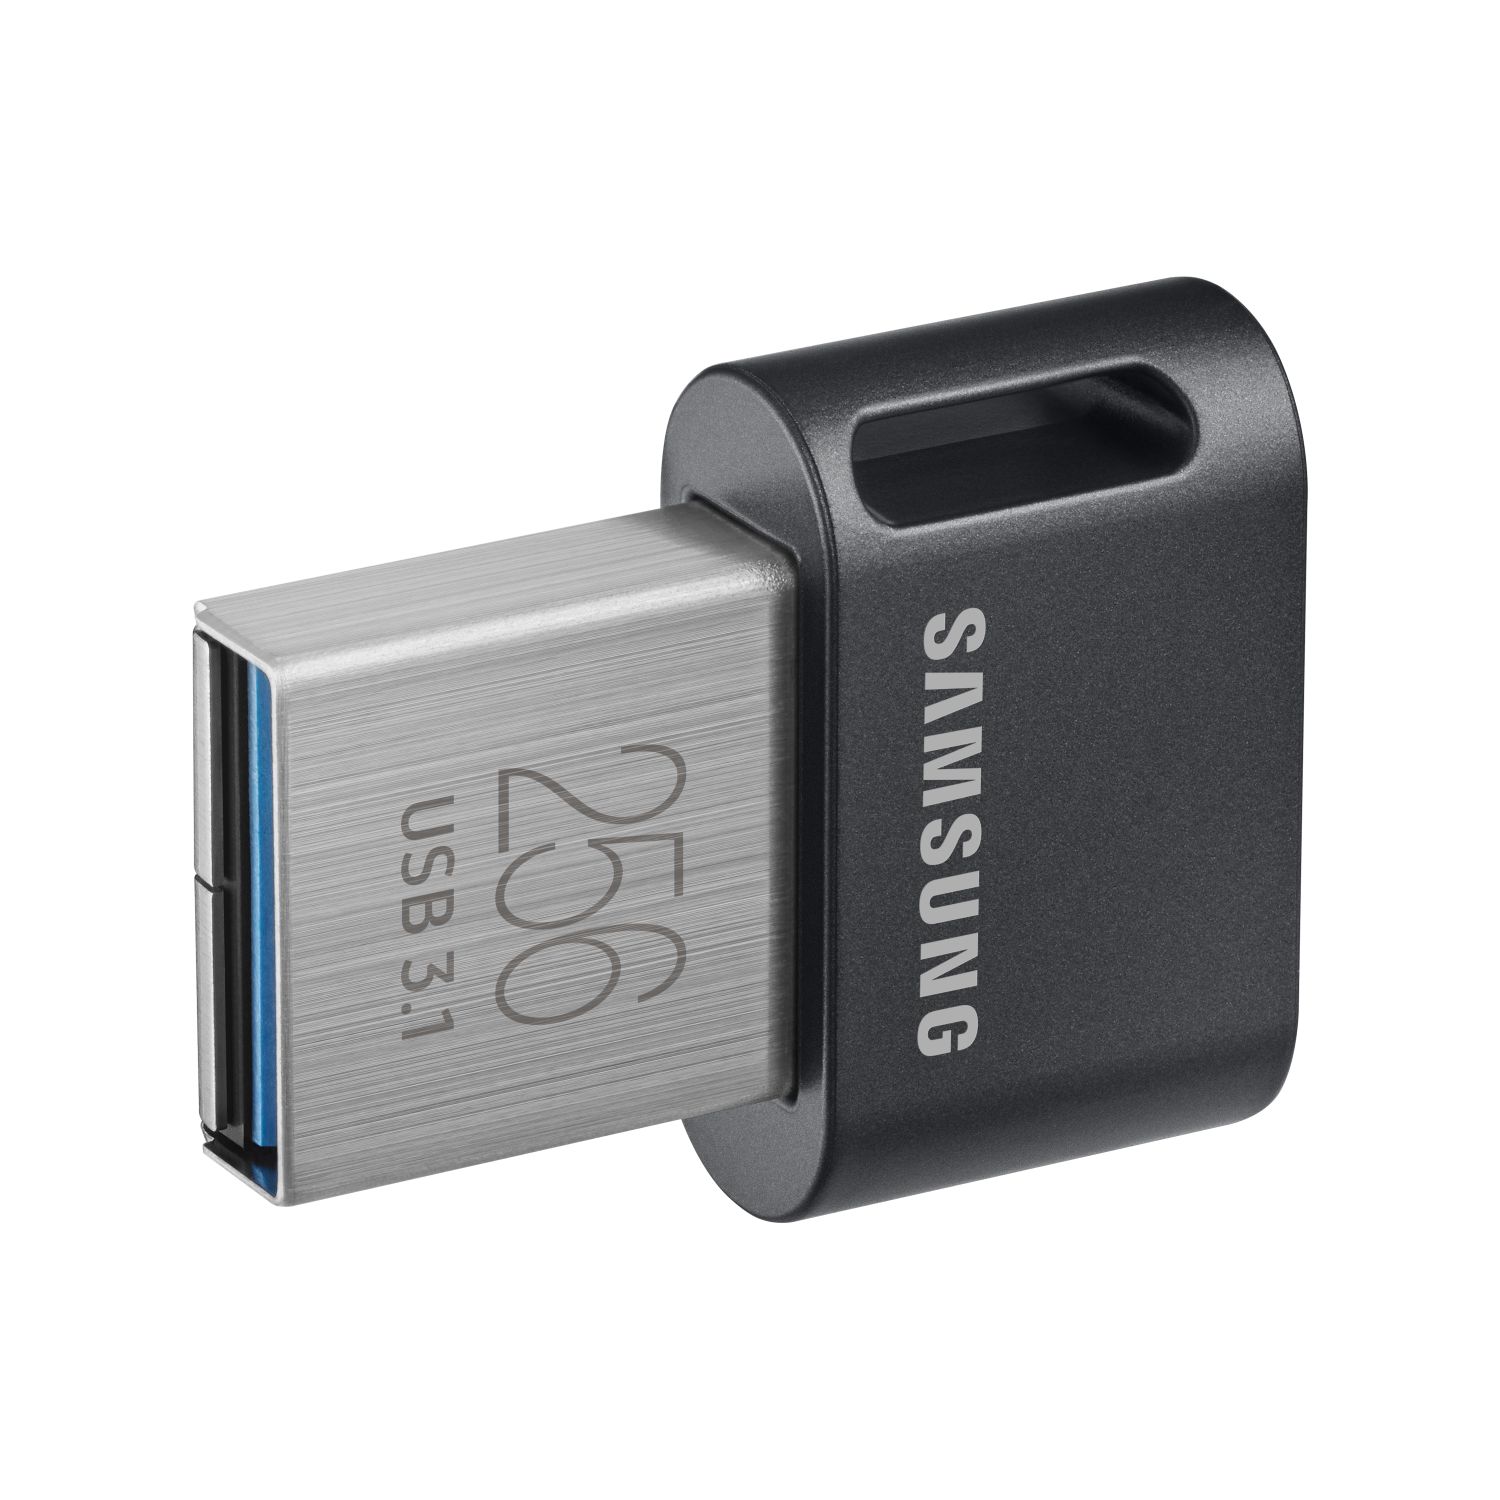 MUF-256AB/APC - Pendrive Samsung Fit Plus APC 256Gb USB-A 3.0 Lectura 300 Mb/s Escritura 30 Mb/s Gris/Plata (MUF-256AB/APC)